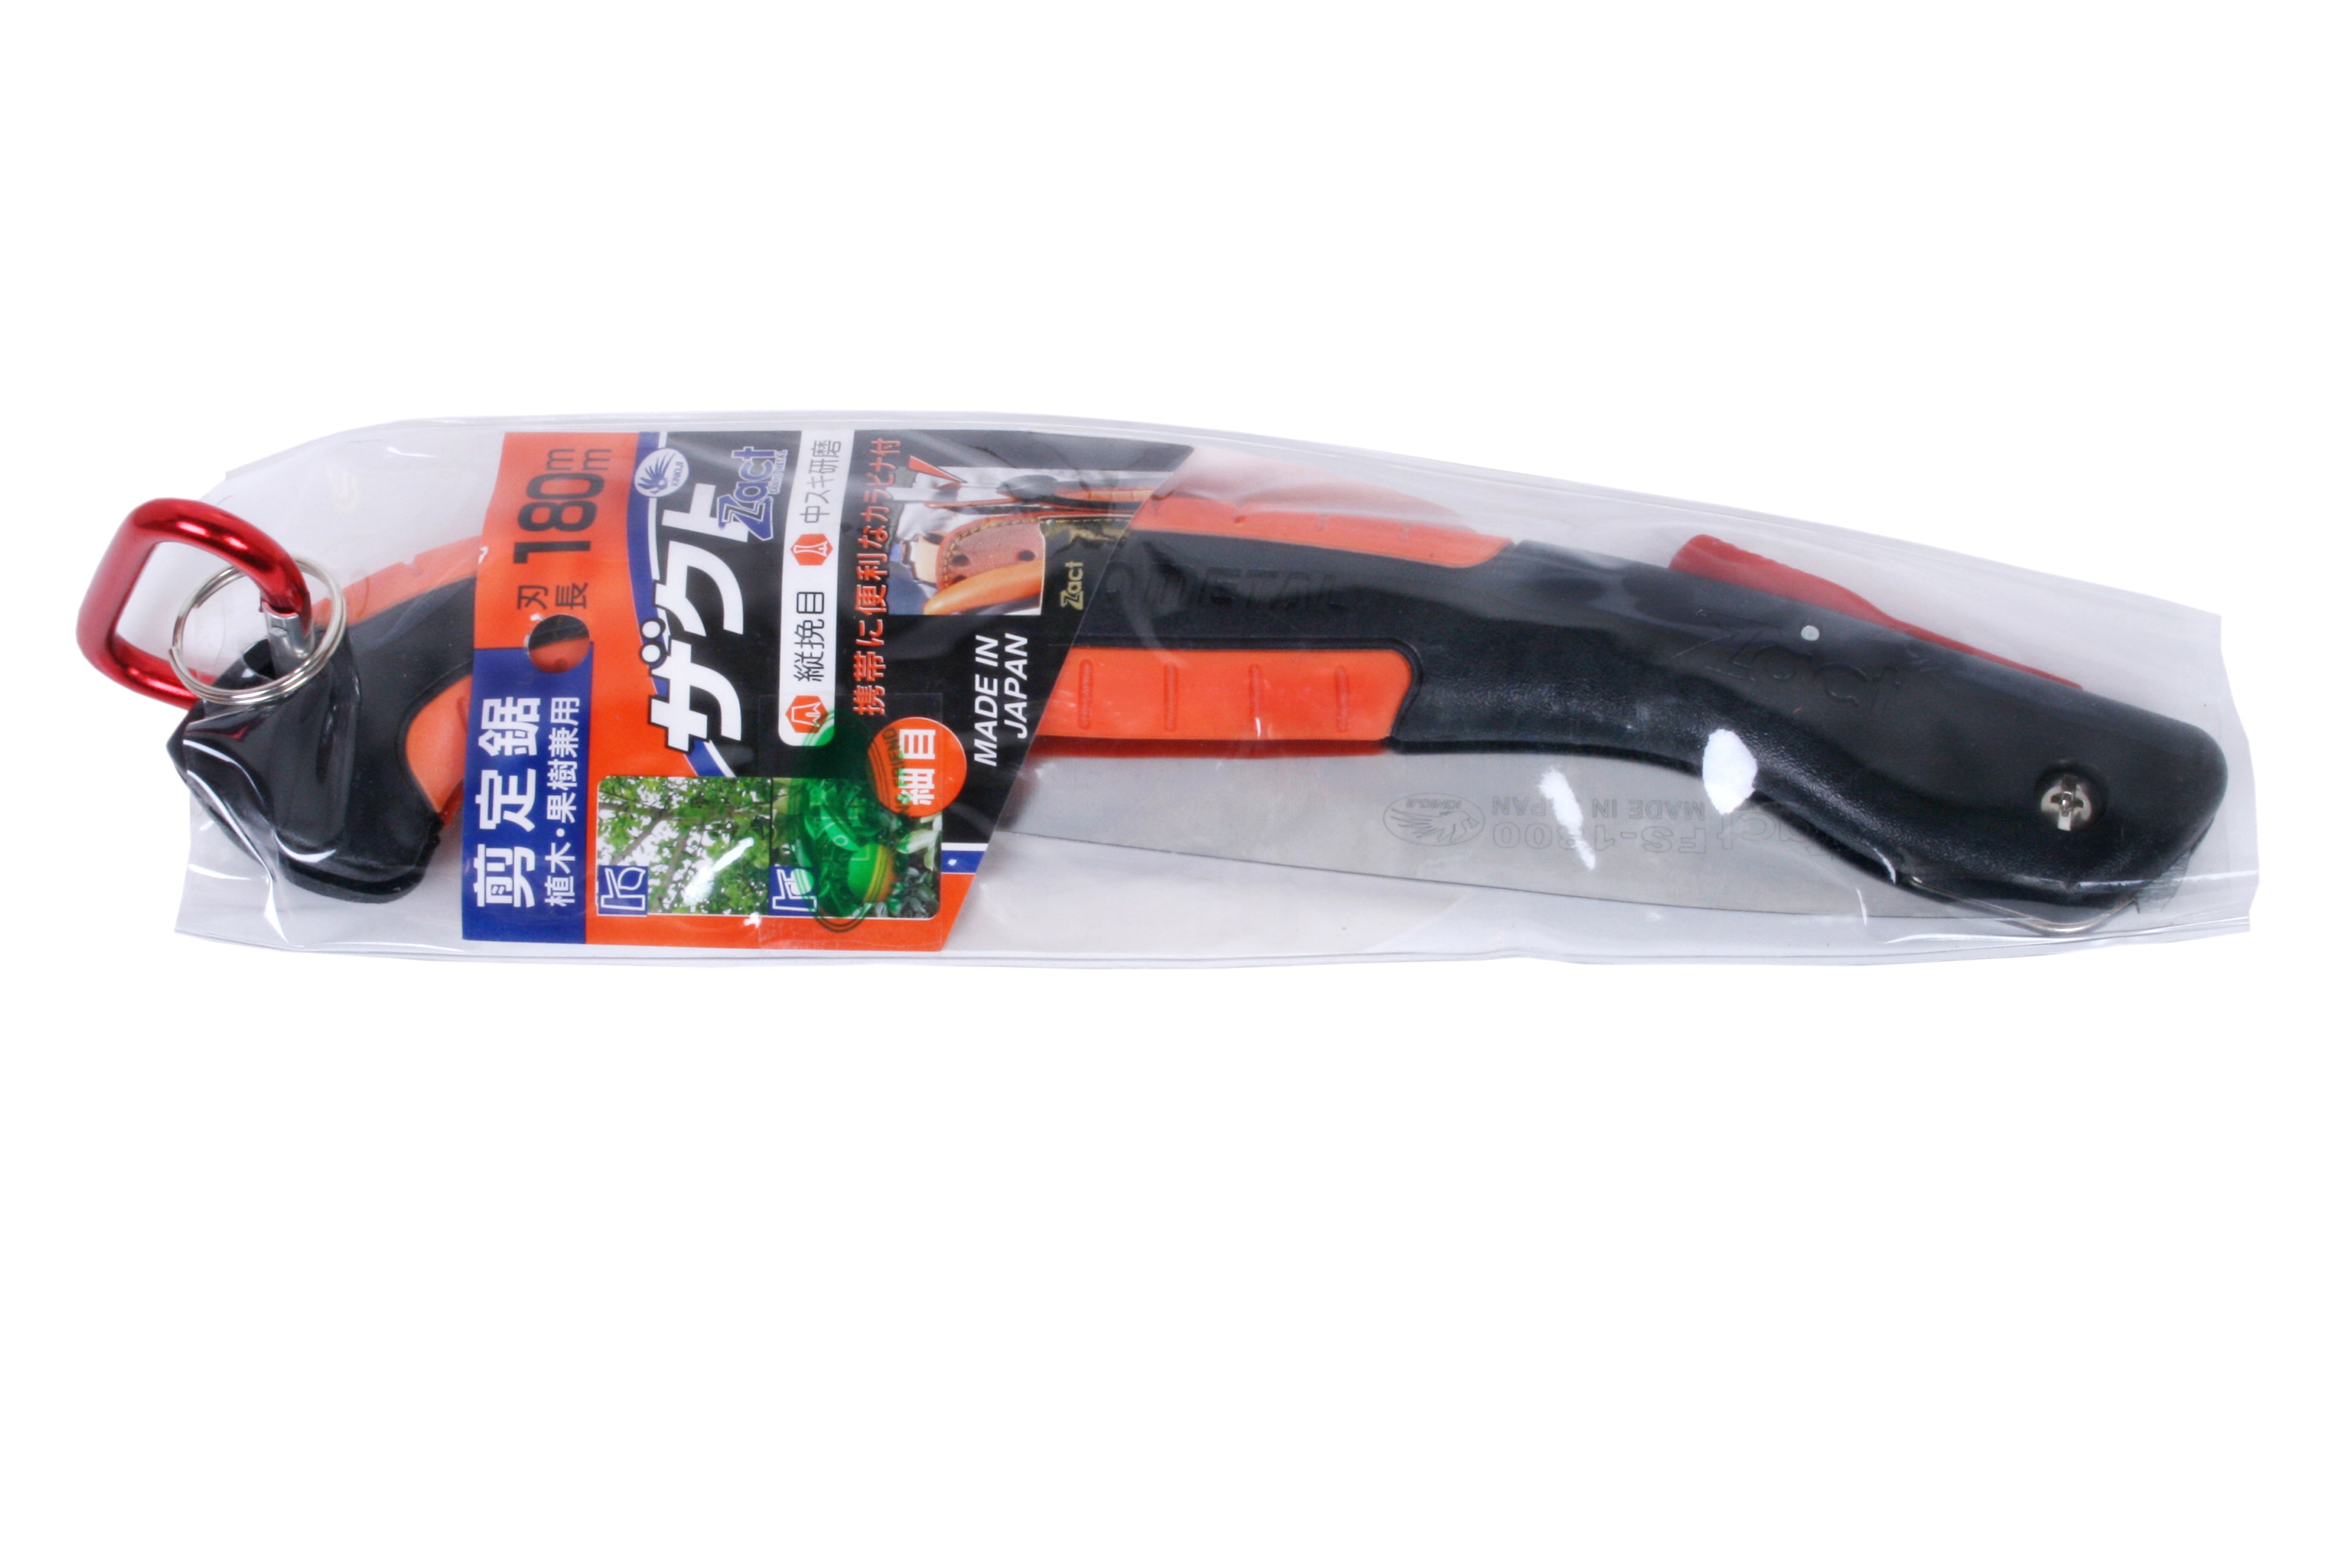 Zact - Fs - 1800 Saw Orange And Black : Garden Tool - myBageecha